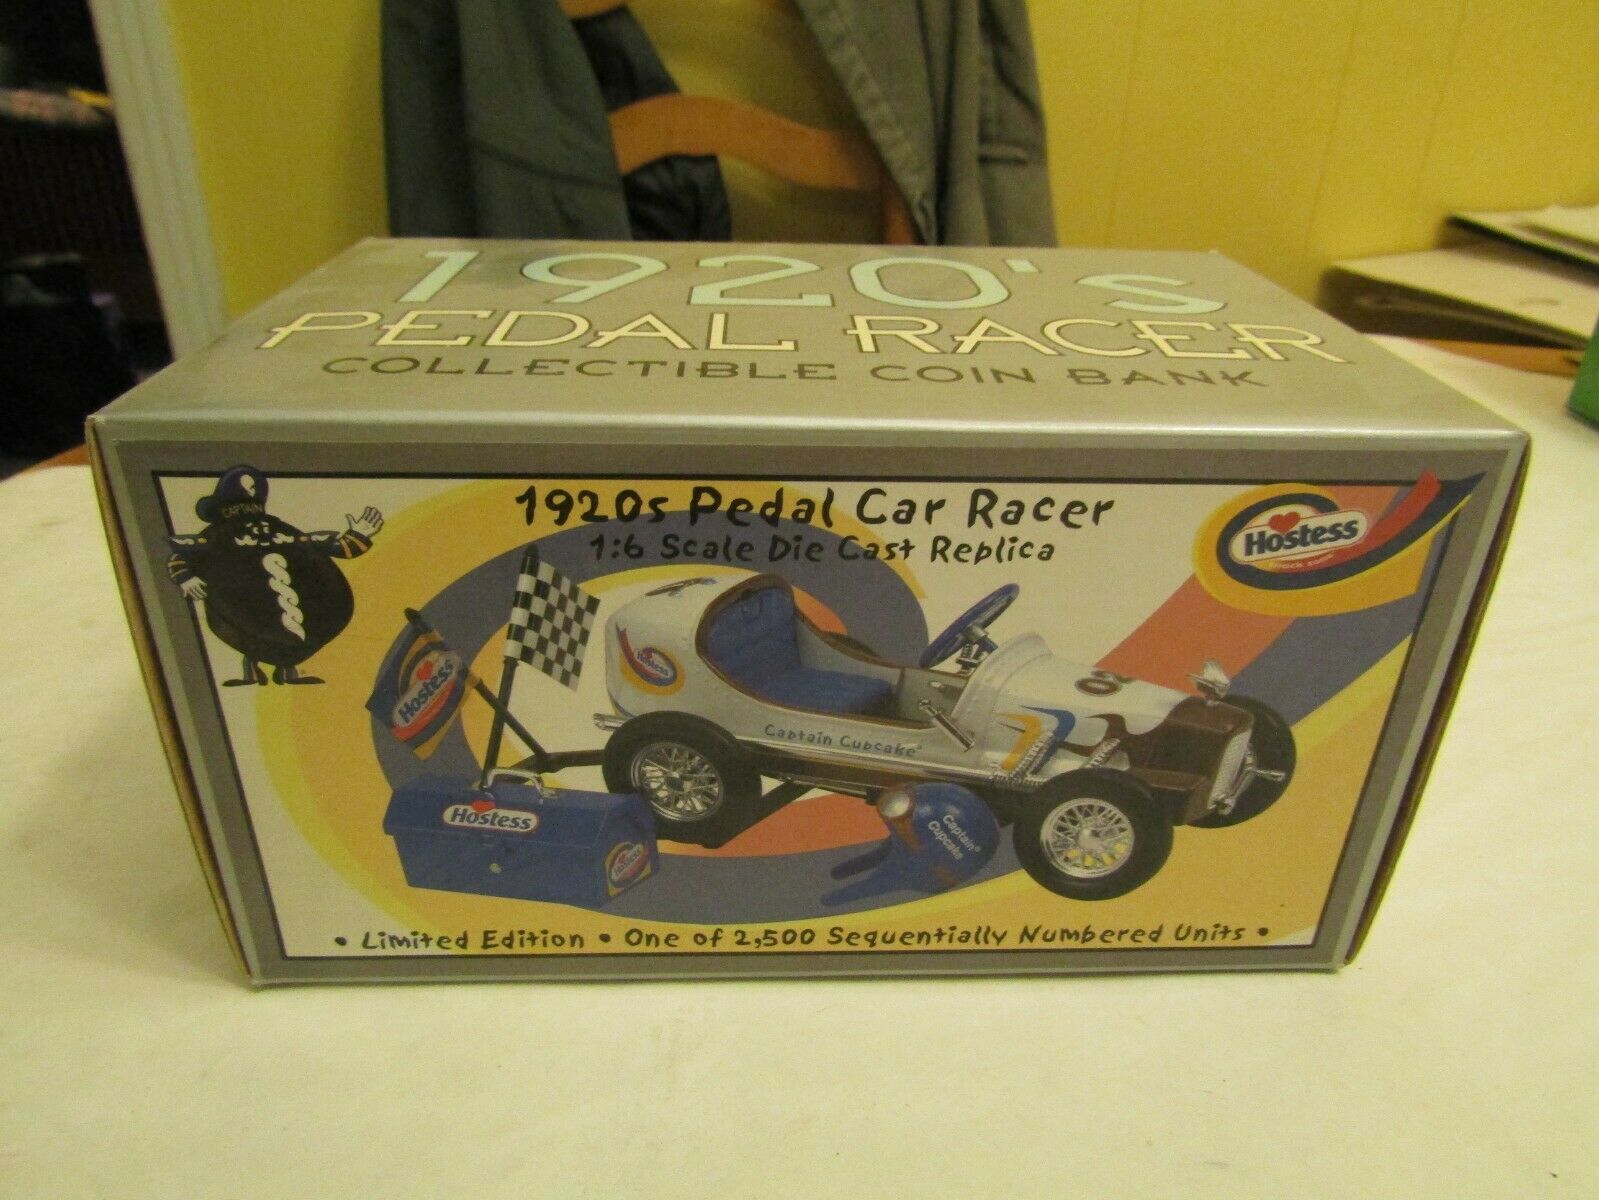 Hostess Captain Cupcake 1920s Pedal Car Racer (#65 of 2,500) - $146.00